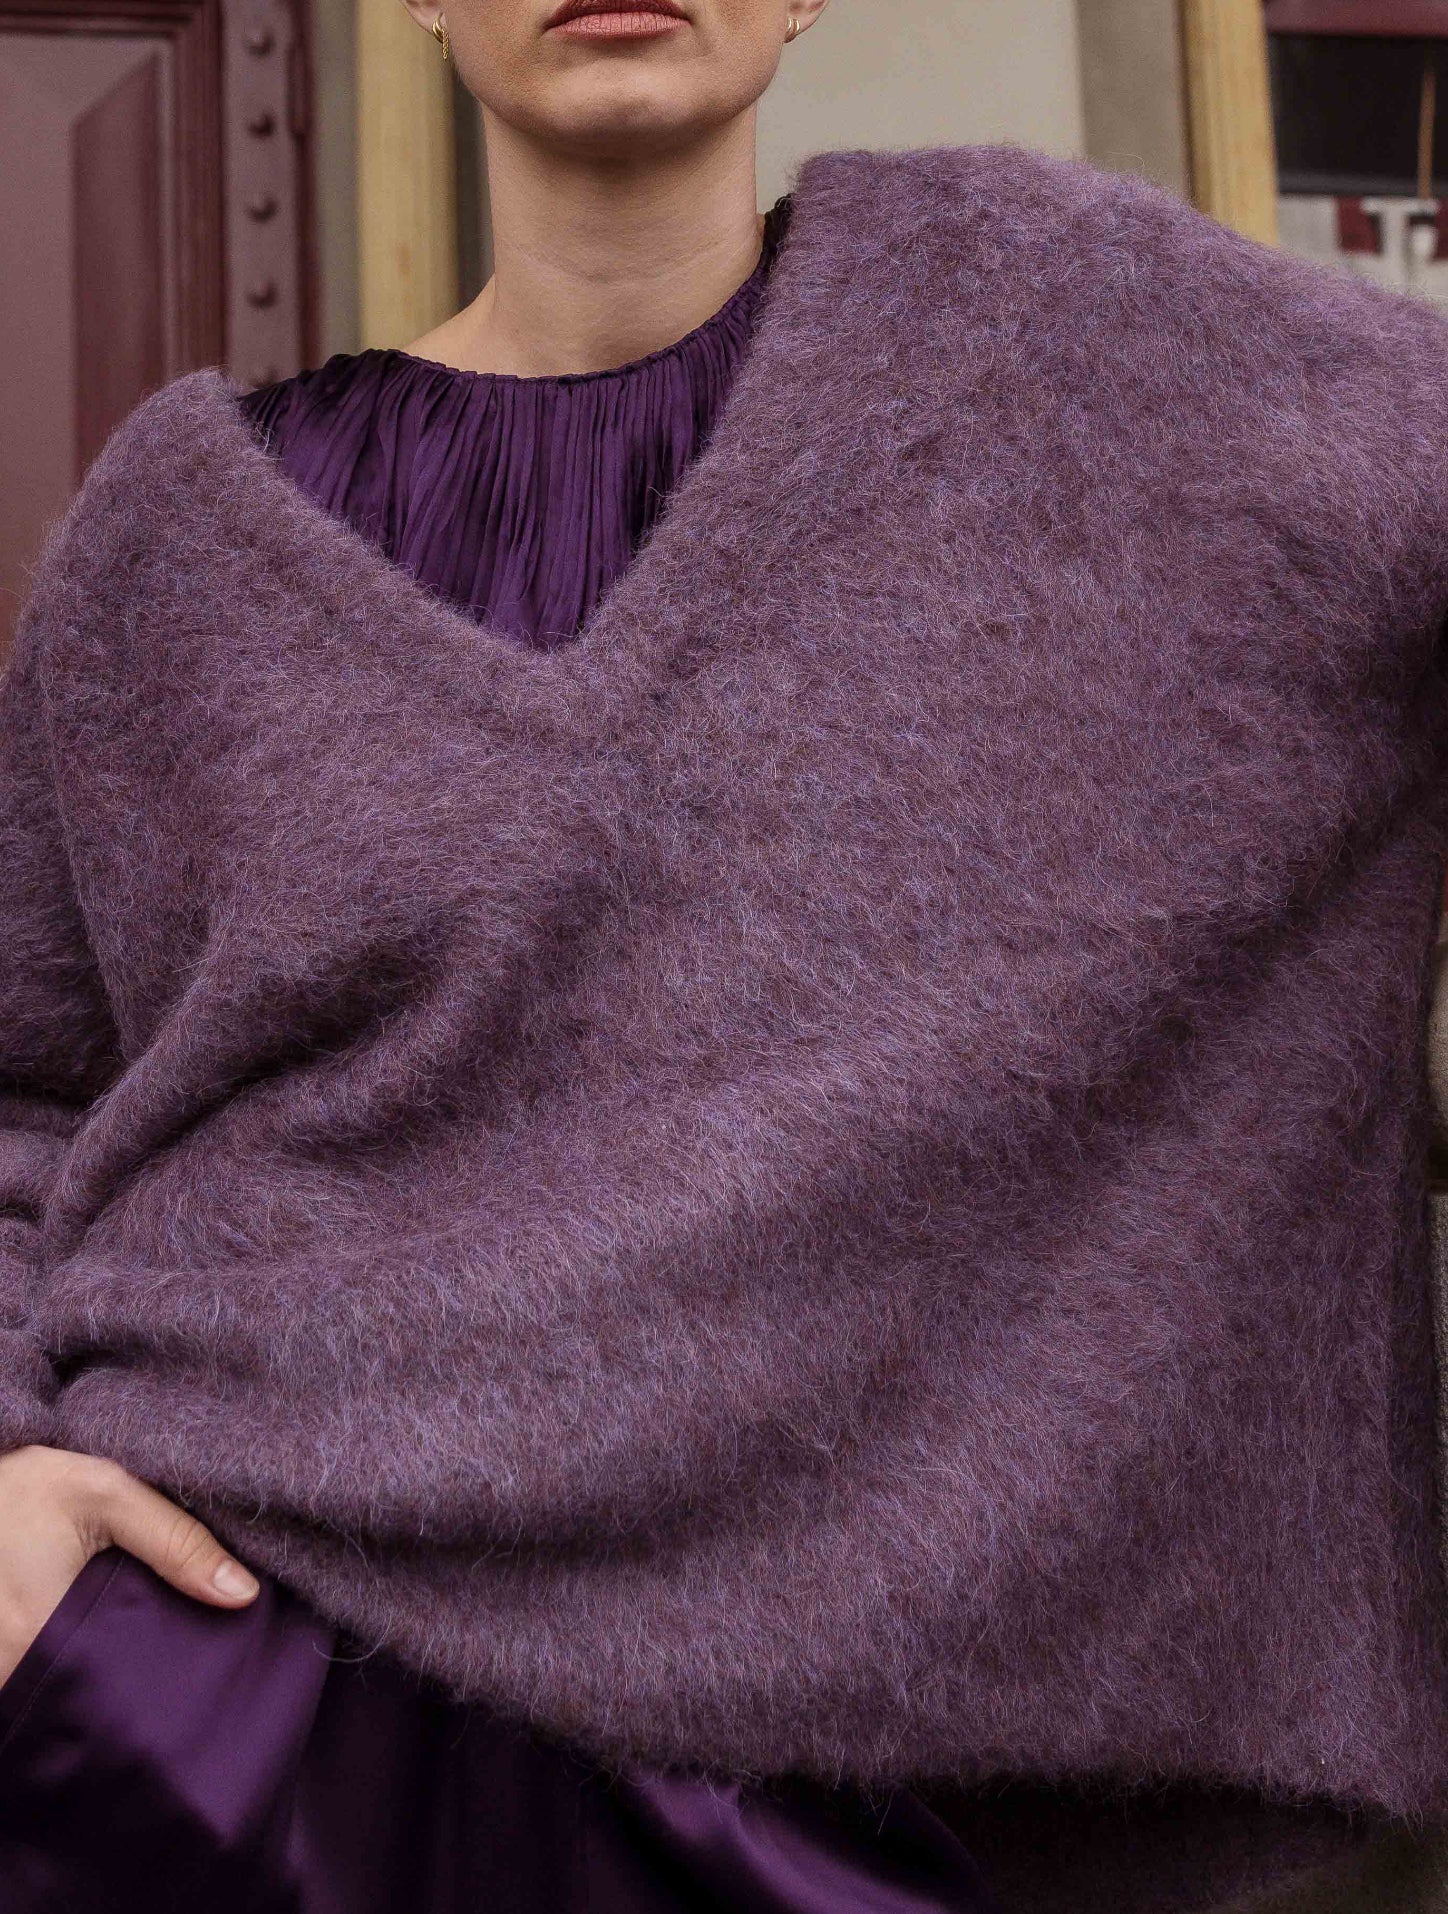 M.A Dainty II BALACLAVA Sweater - Chocolate/Lavender